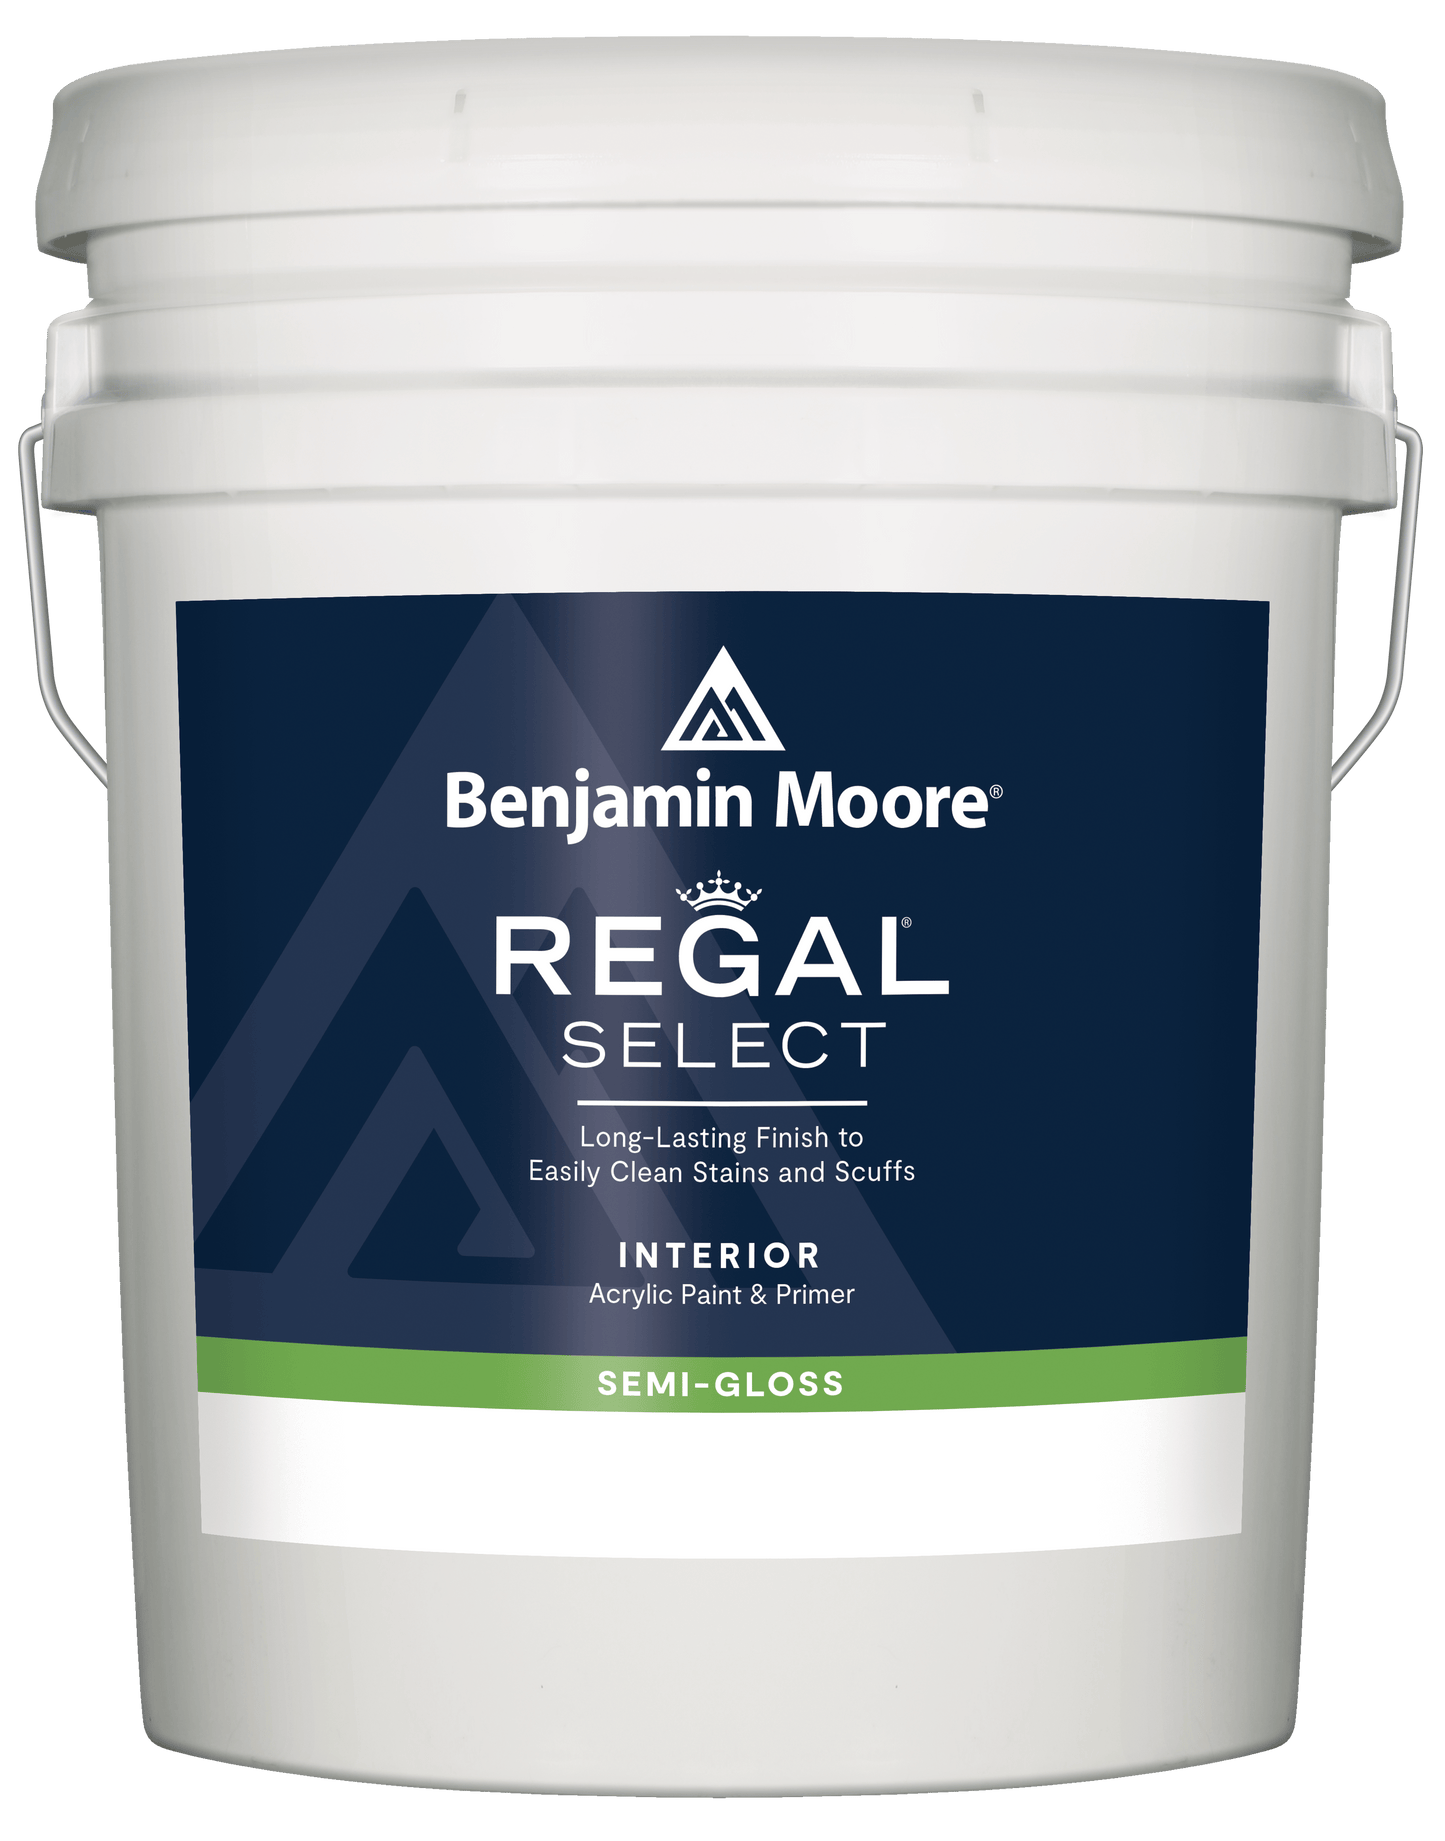 Benjamin Moore Regal Select - Rossi Paint Stores - Semi-Gloss - 5 Gallon